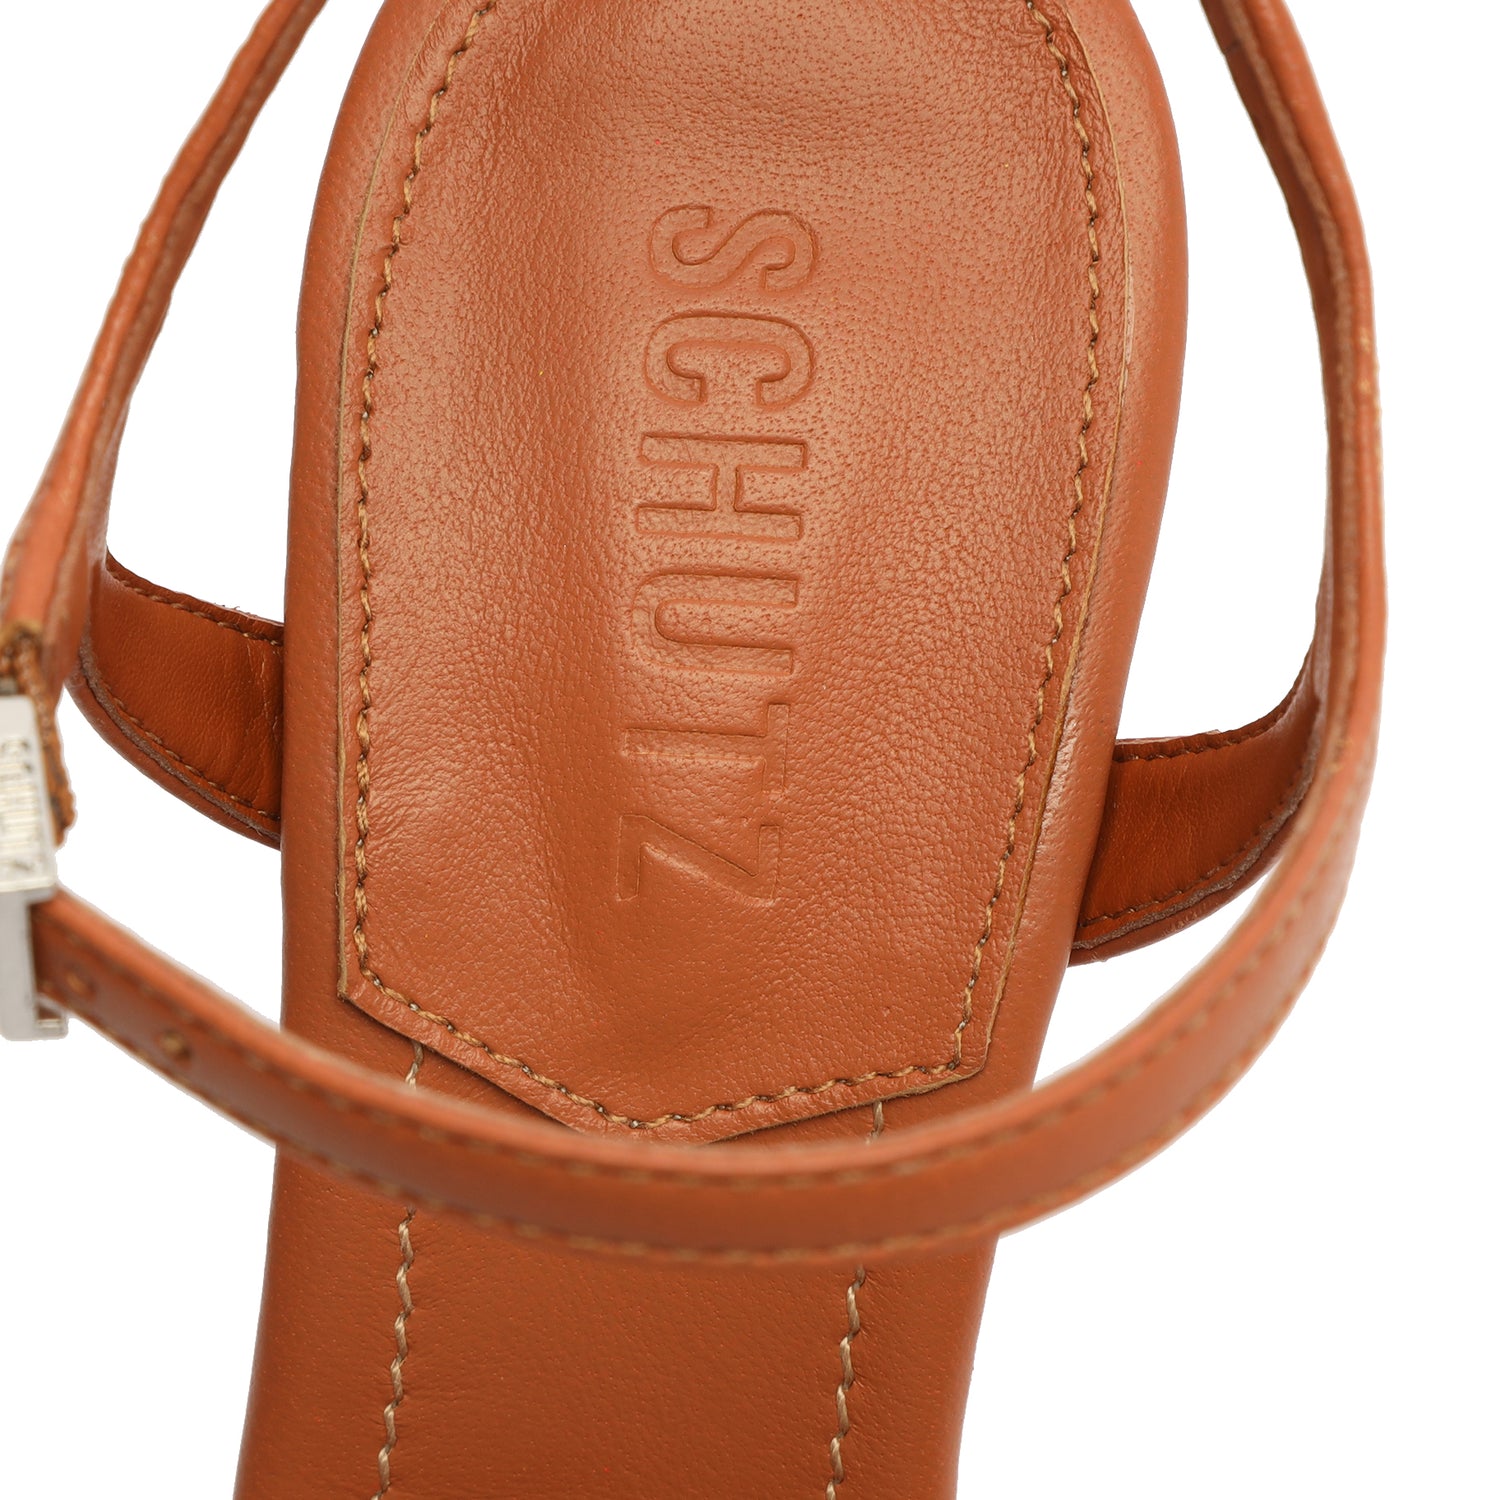 Keefa High Nappa Leather Sandal Caramel Nappa Leather